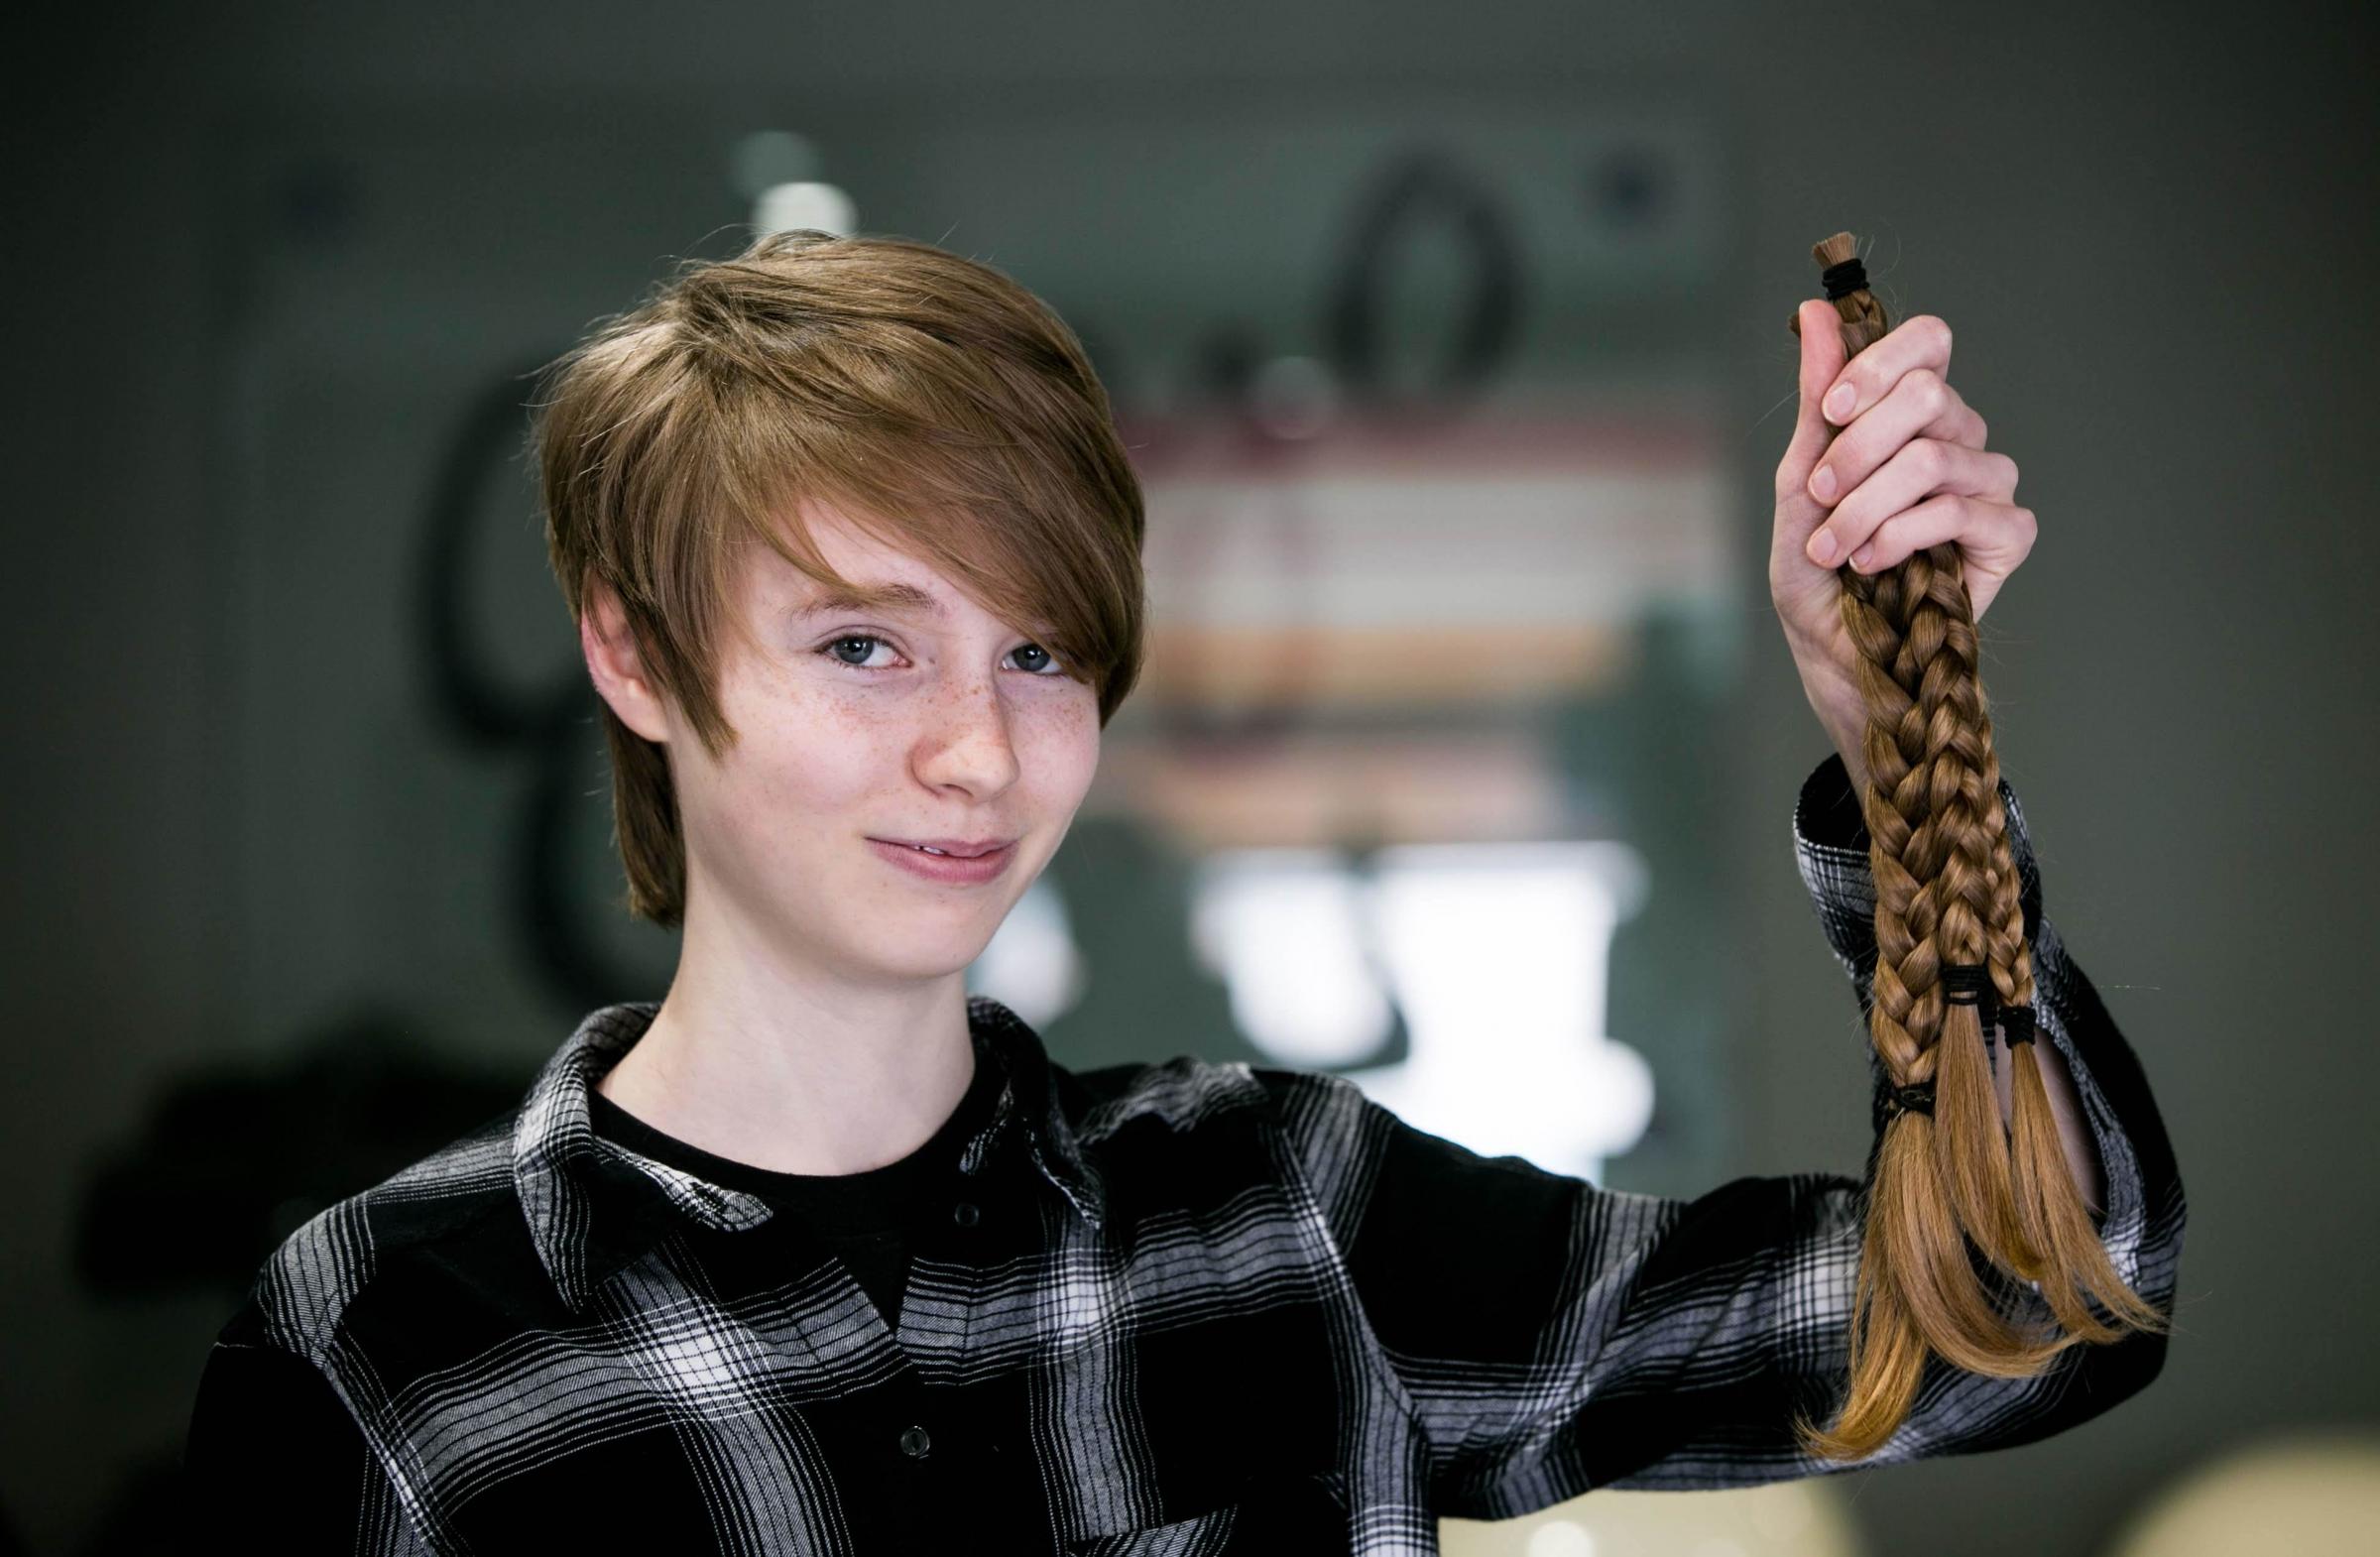 donating hair for children's wigs uk